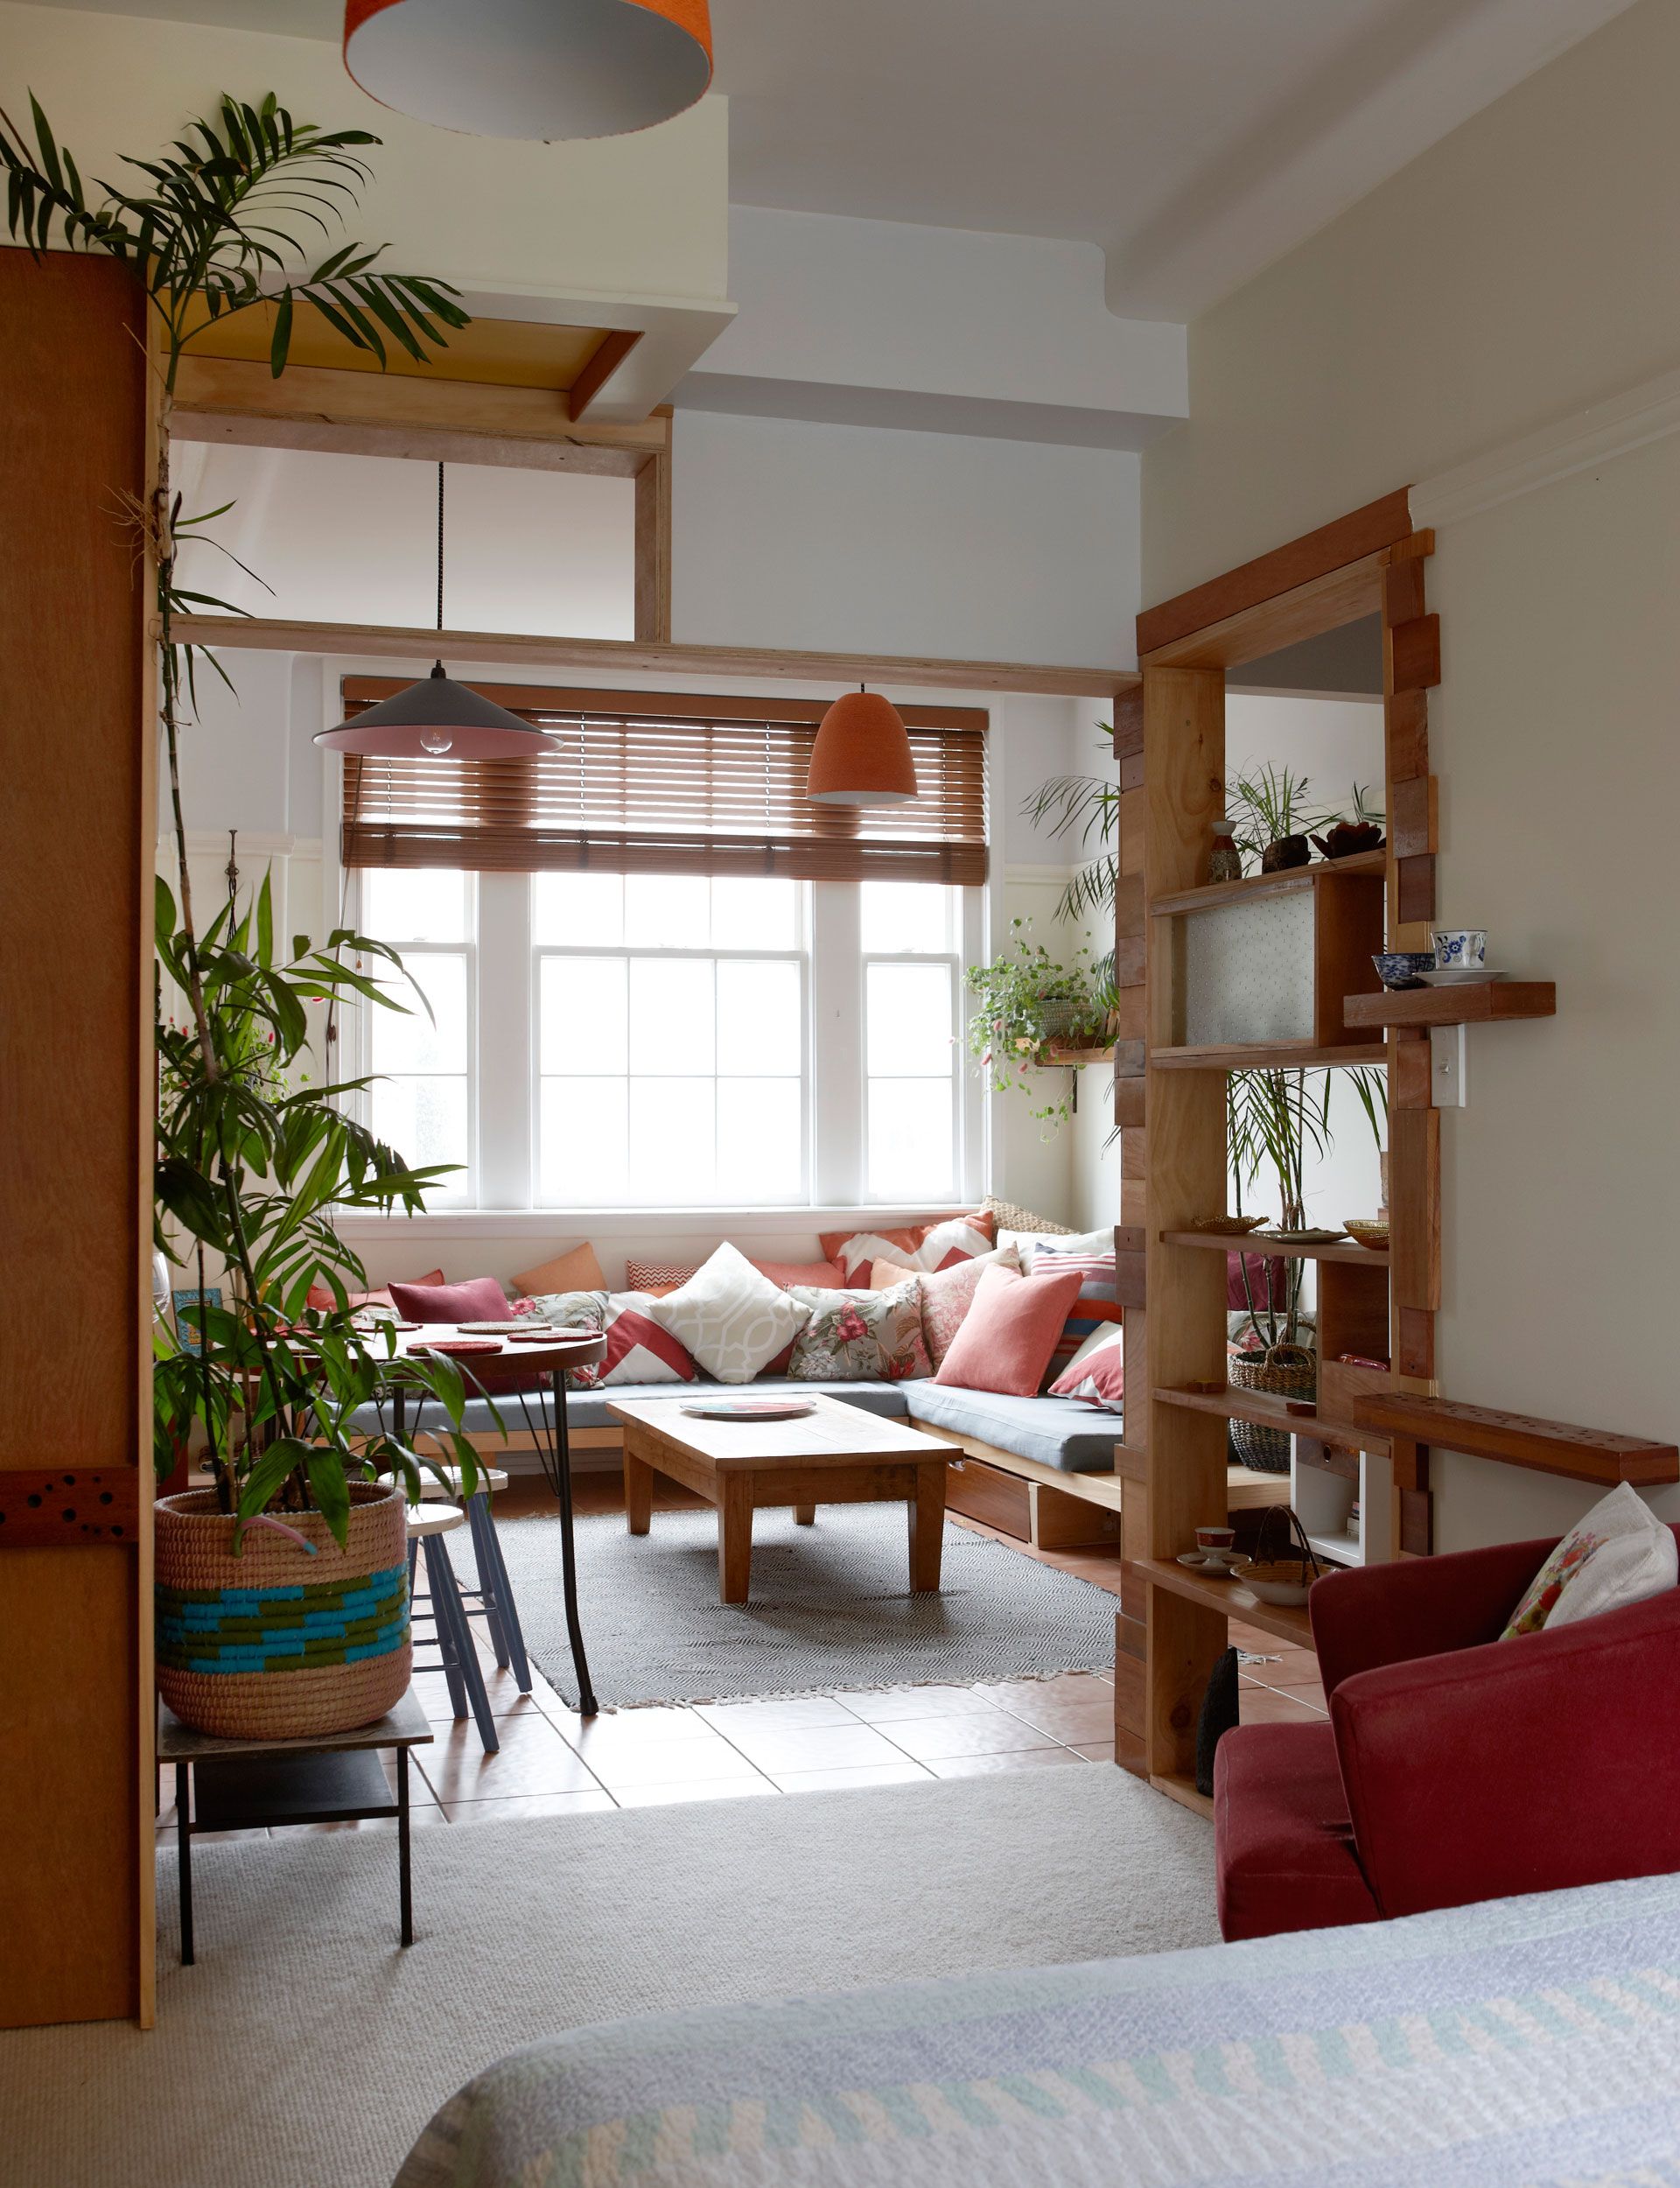 10 Asian Inspired Home Decor Ideas For A Zen Retreat